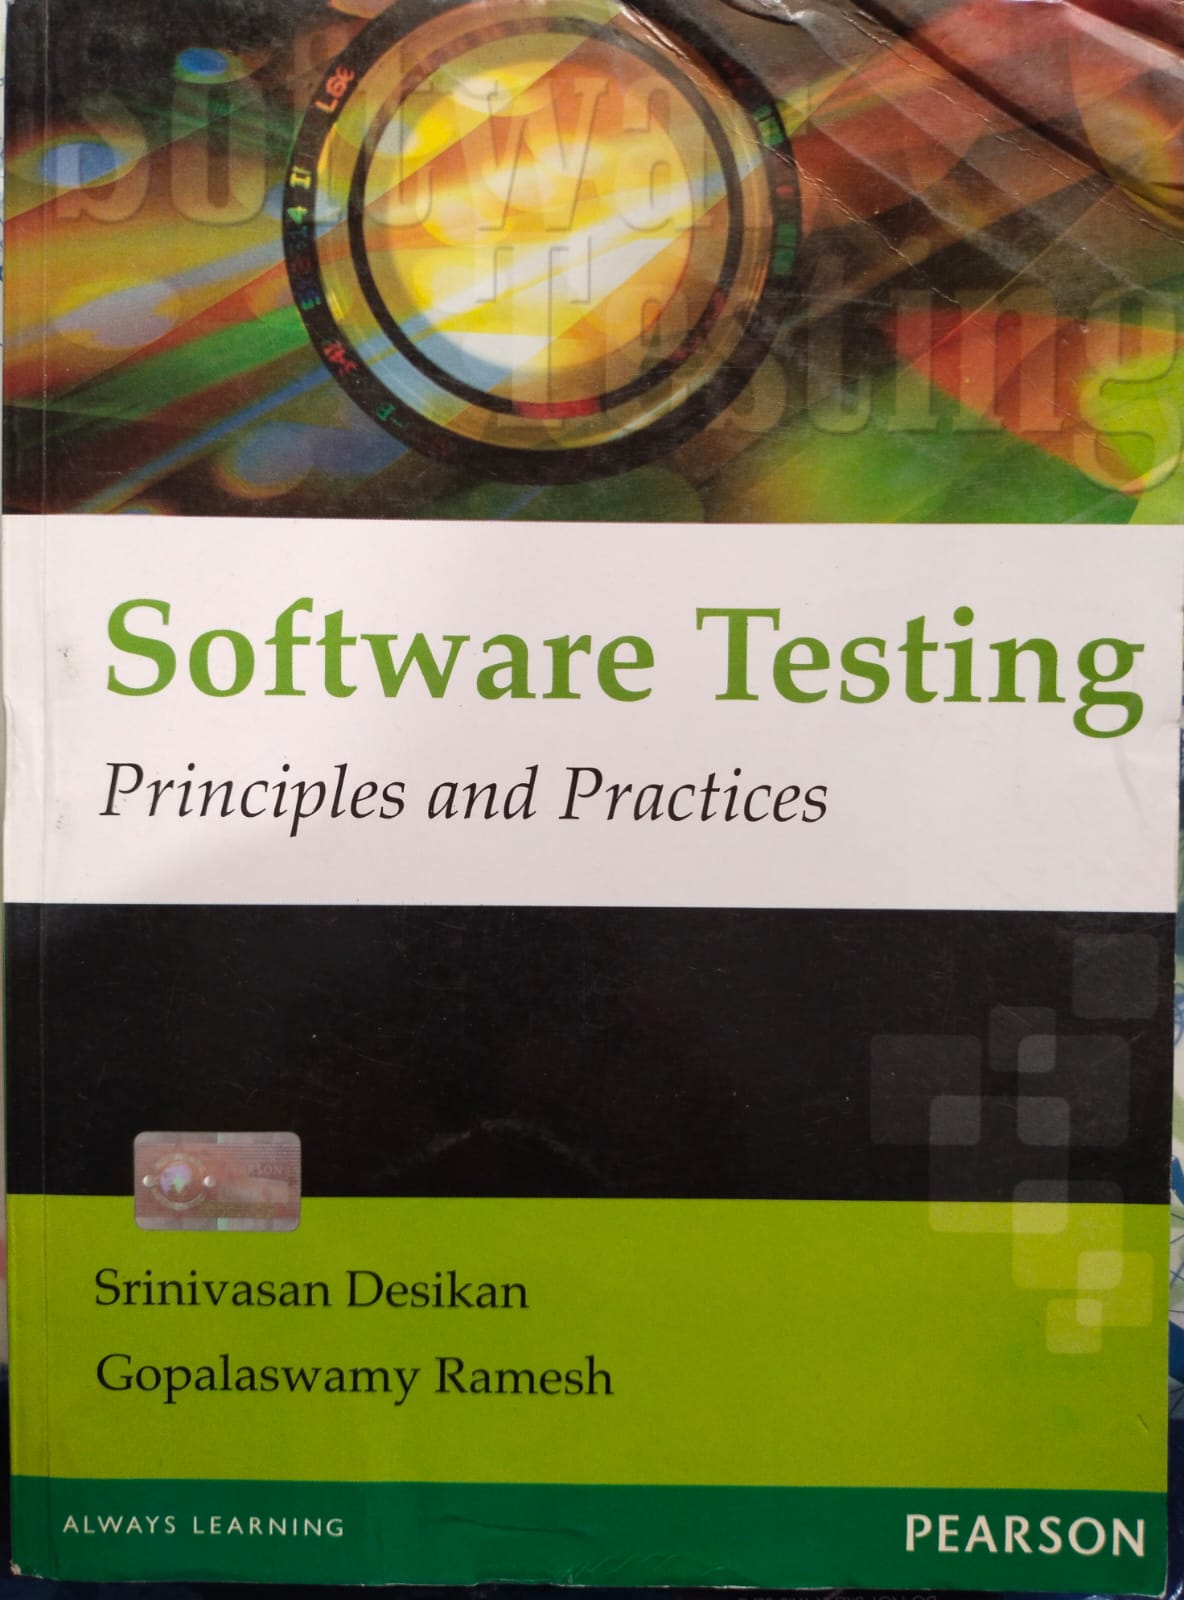 Software Testing by Srinivasan Desikan and Gopalaswamy Ramesh